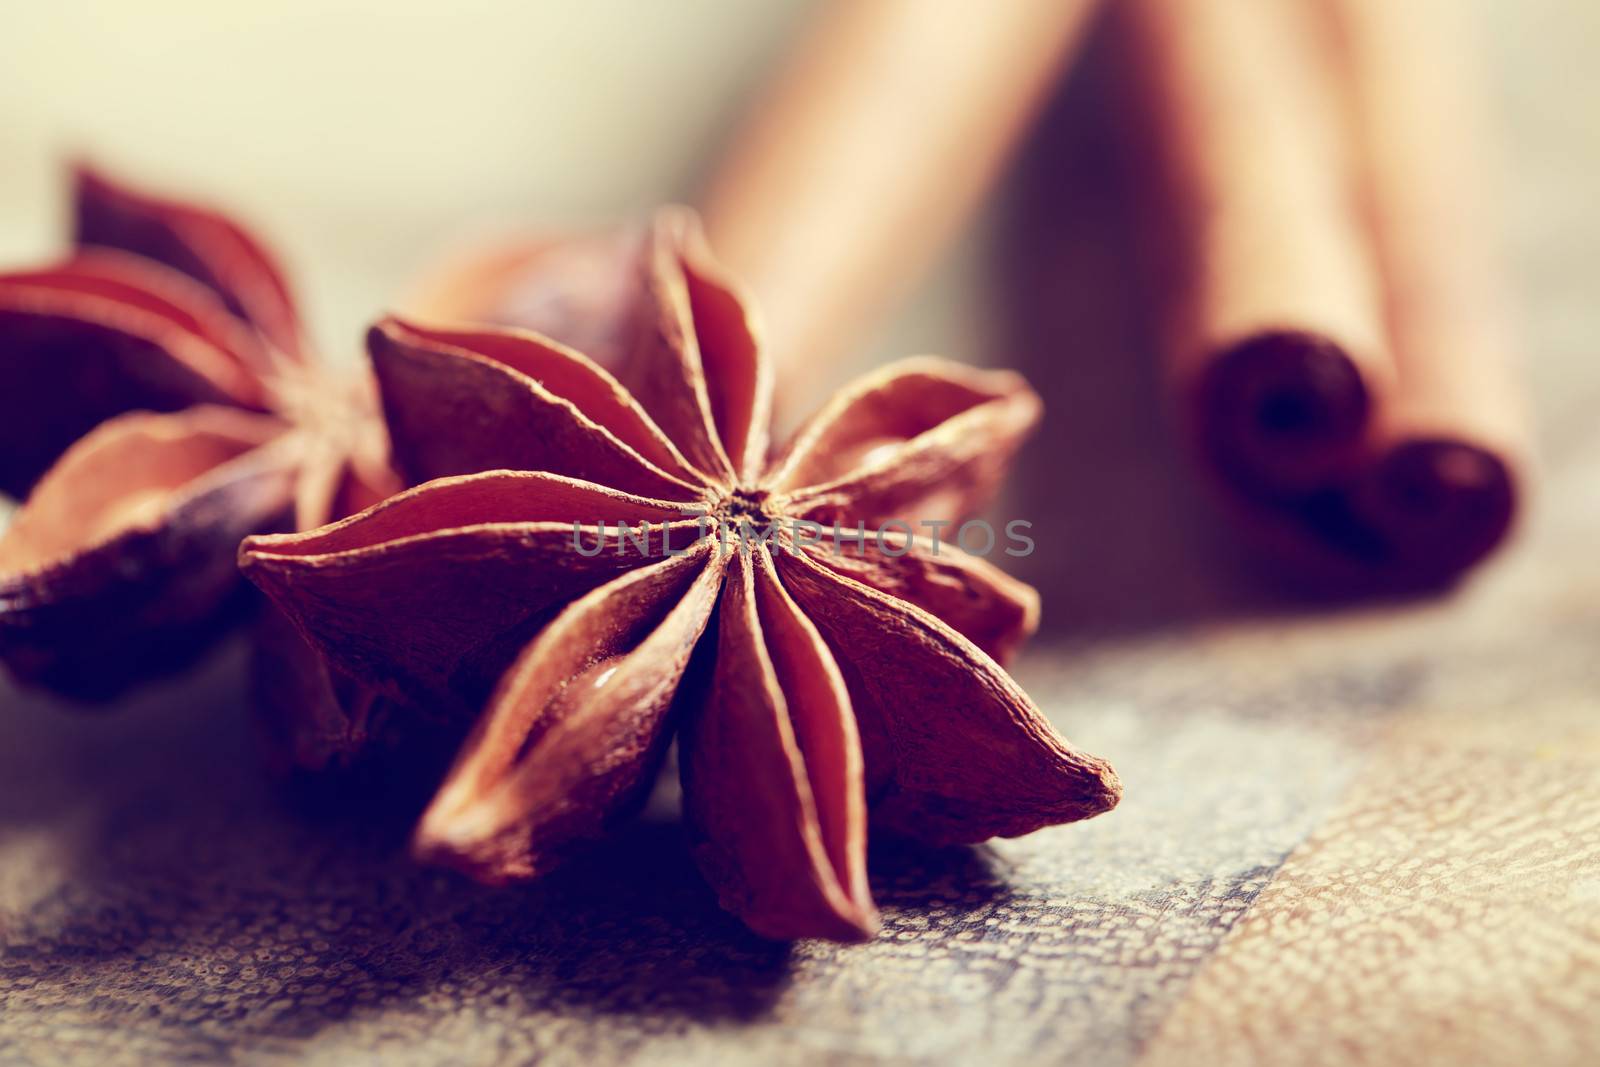 Star anise with cinnamon sticks by melpomene